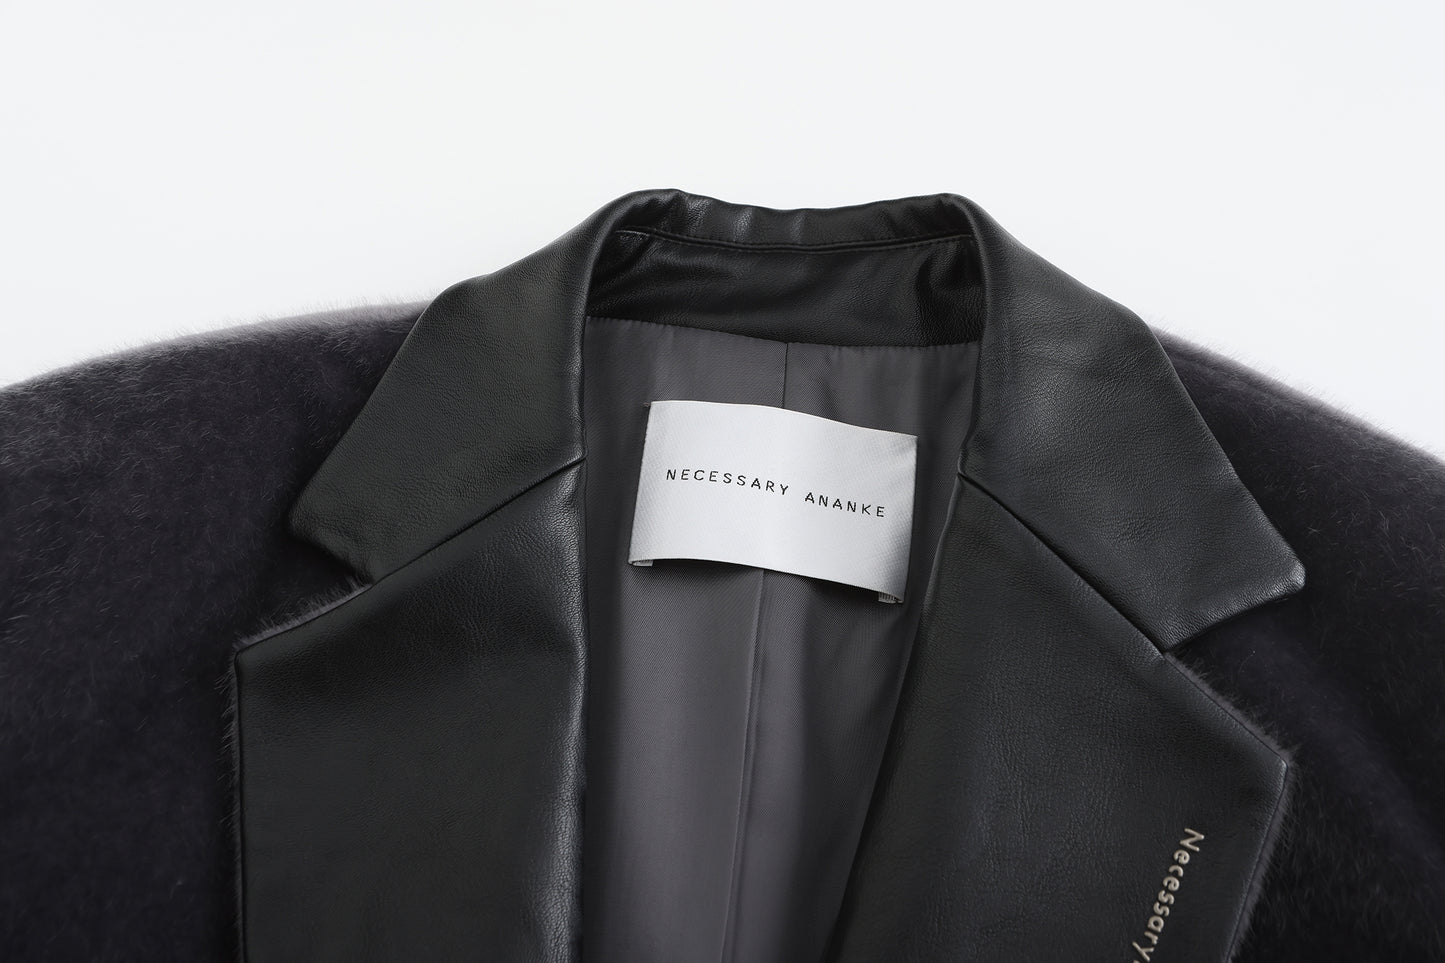 Gray patchwork leather trim eco-friendly fur jacket